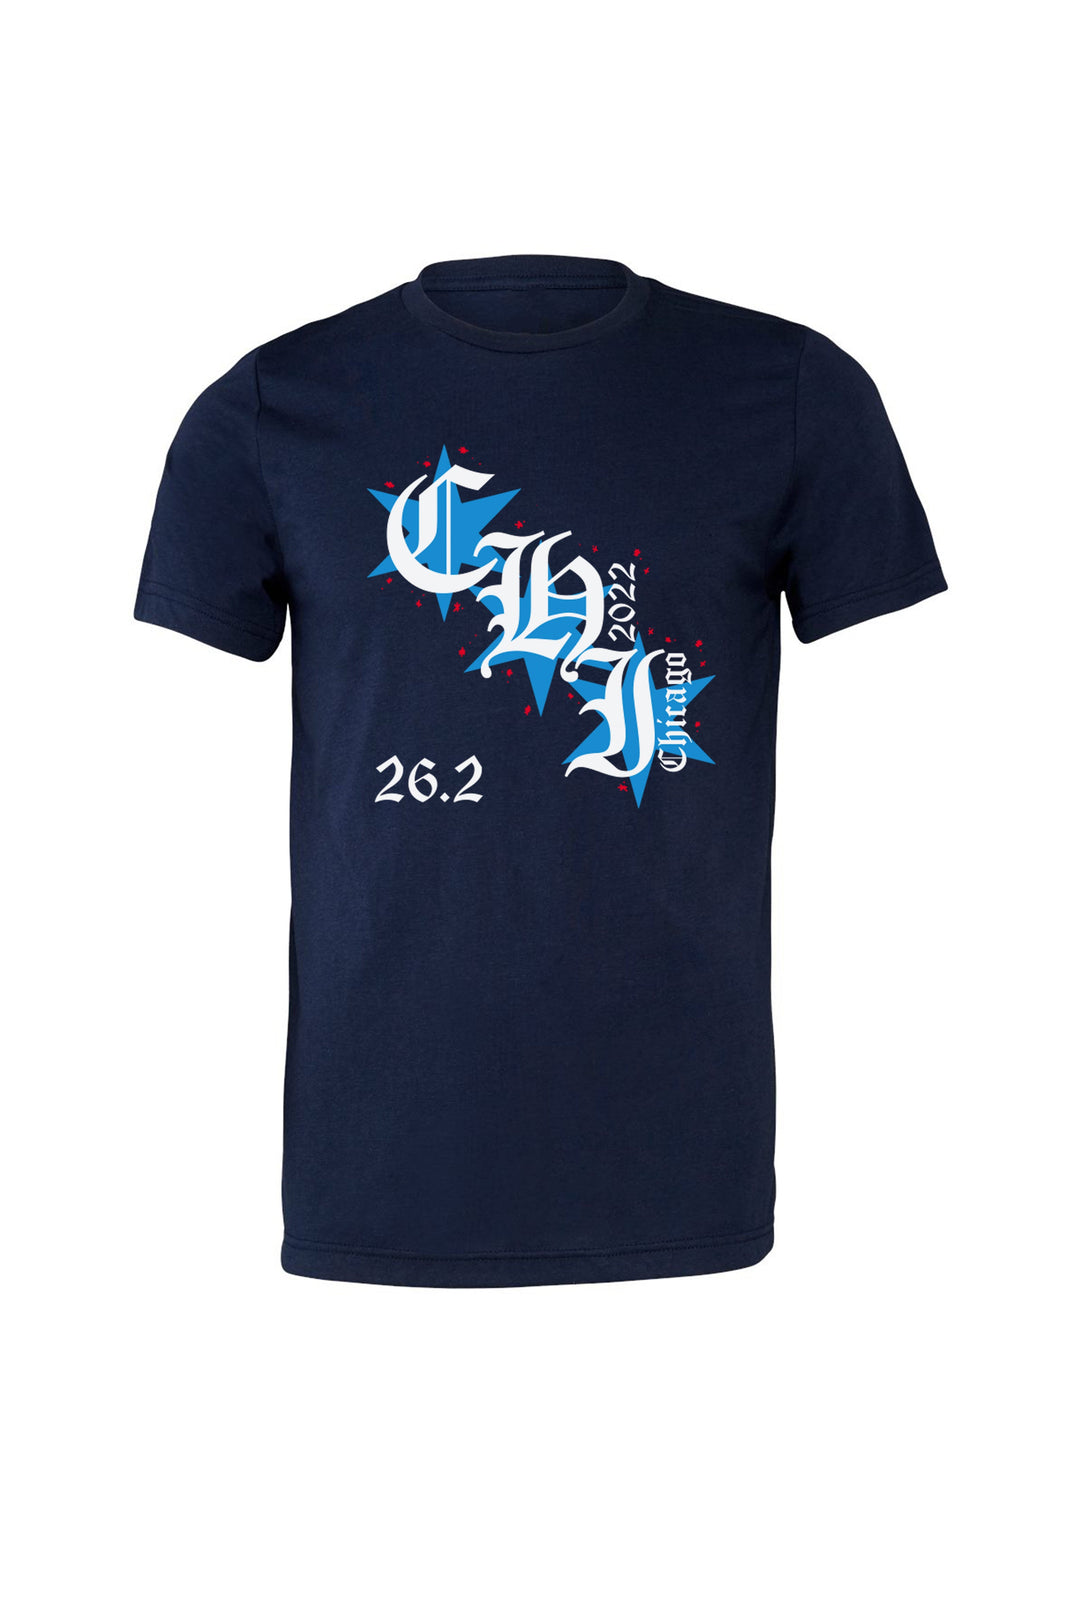 Sarah Marie Design Studio Unisex Tee Navy / XSmall Limited Edition Chicago Marathon T-Shirt